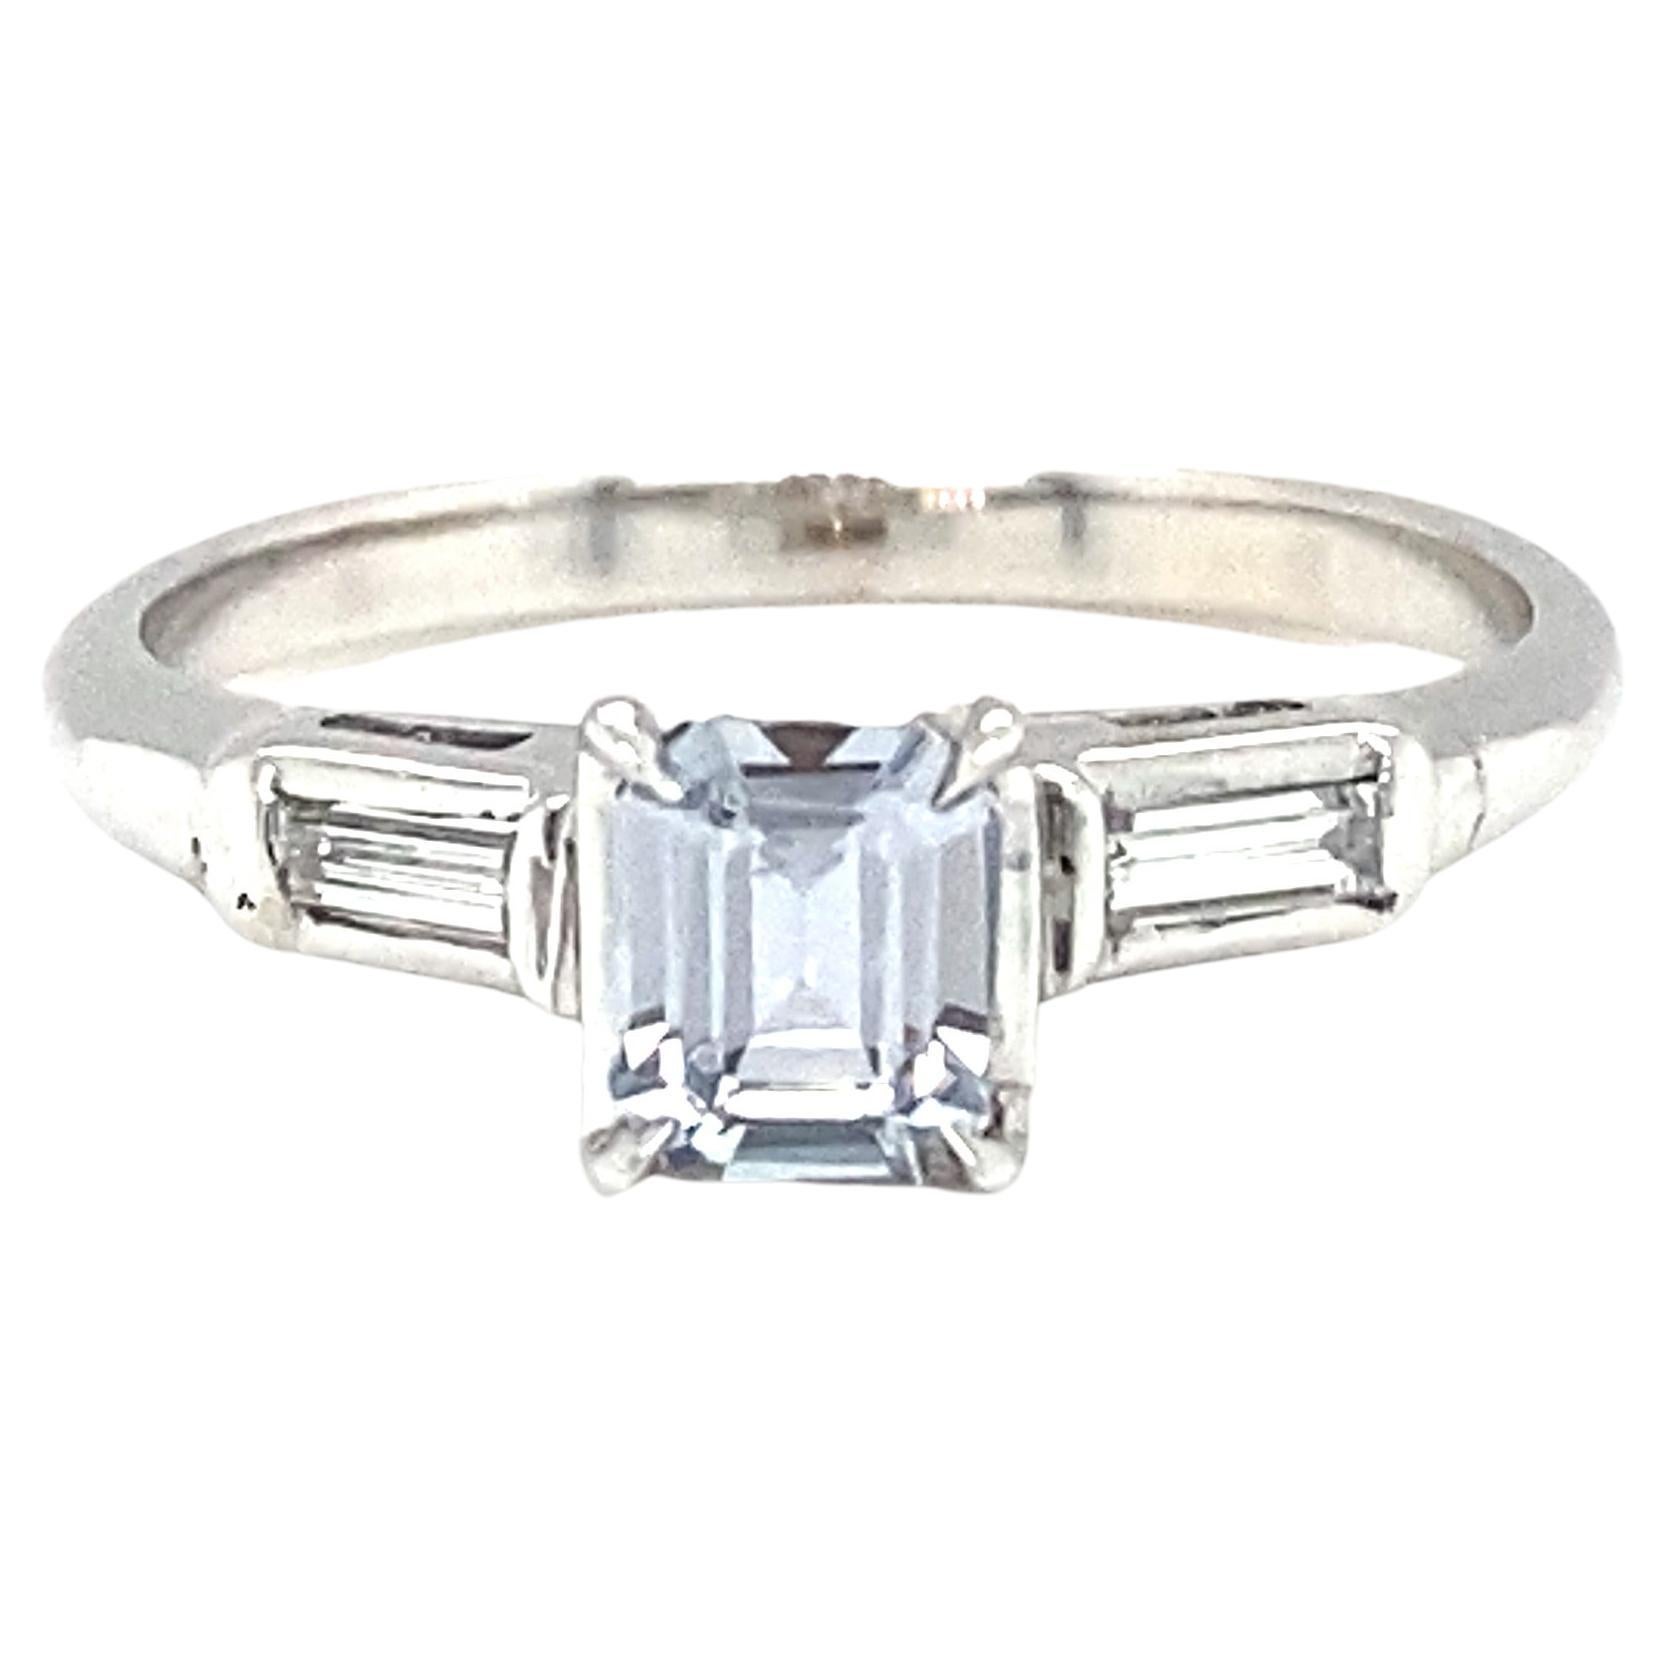 Circa 1920s No Heat Sapphire and Diamond Ring in 14 Karat White Gold